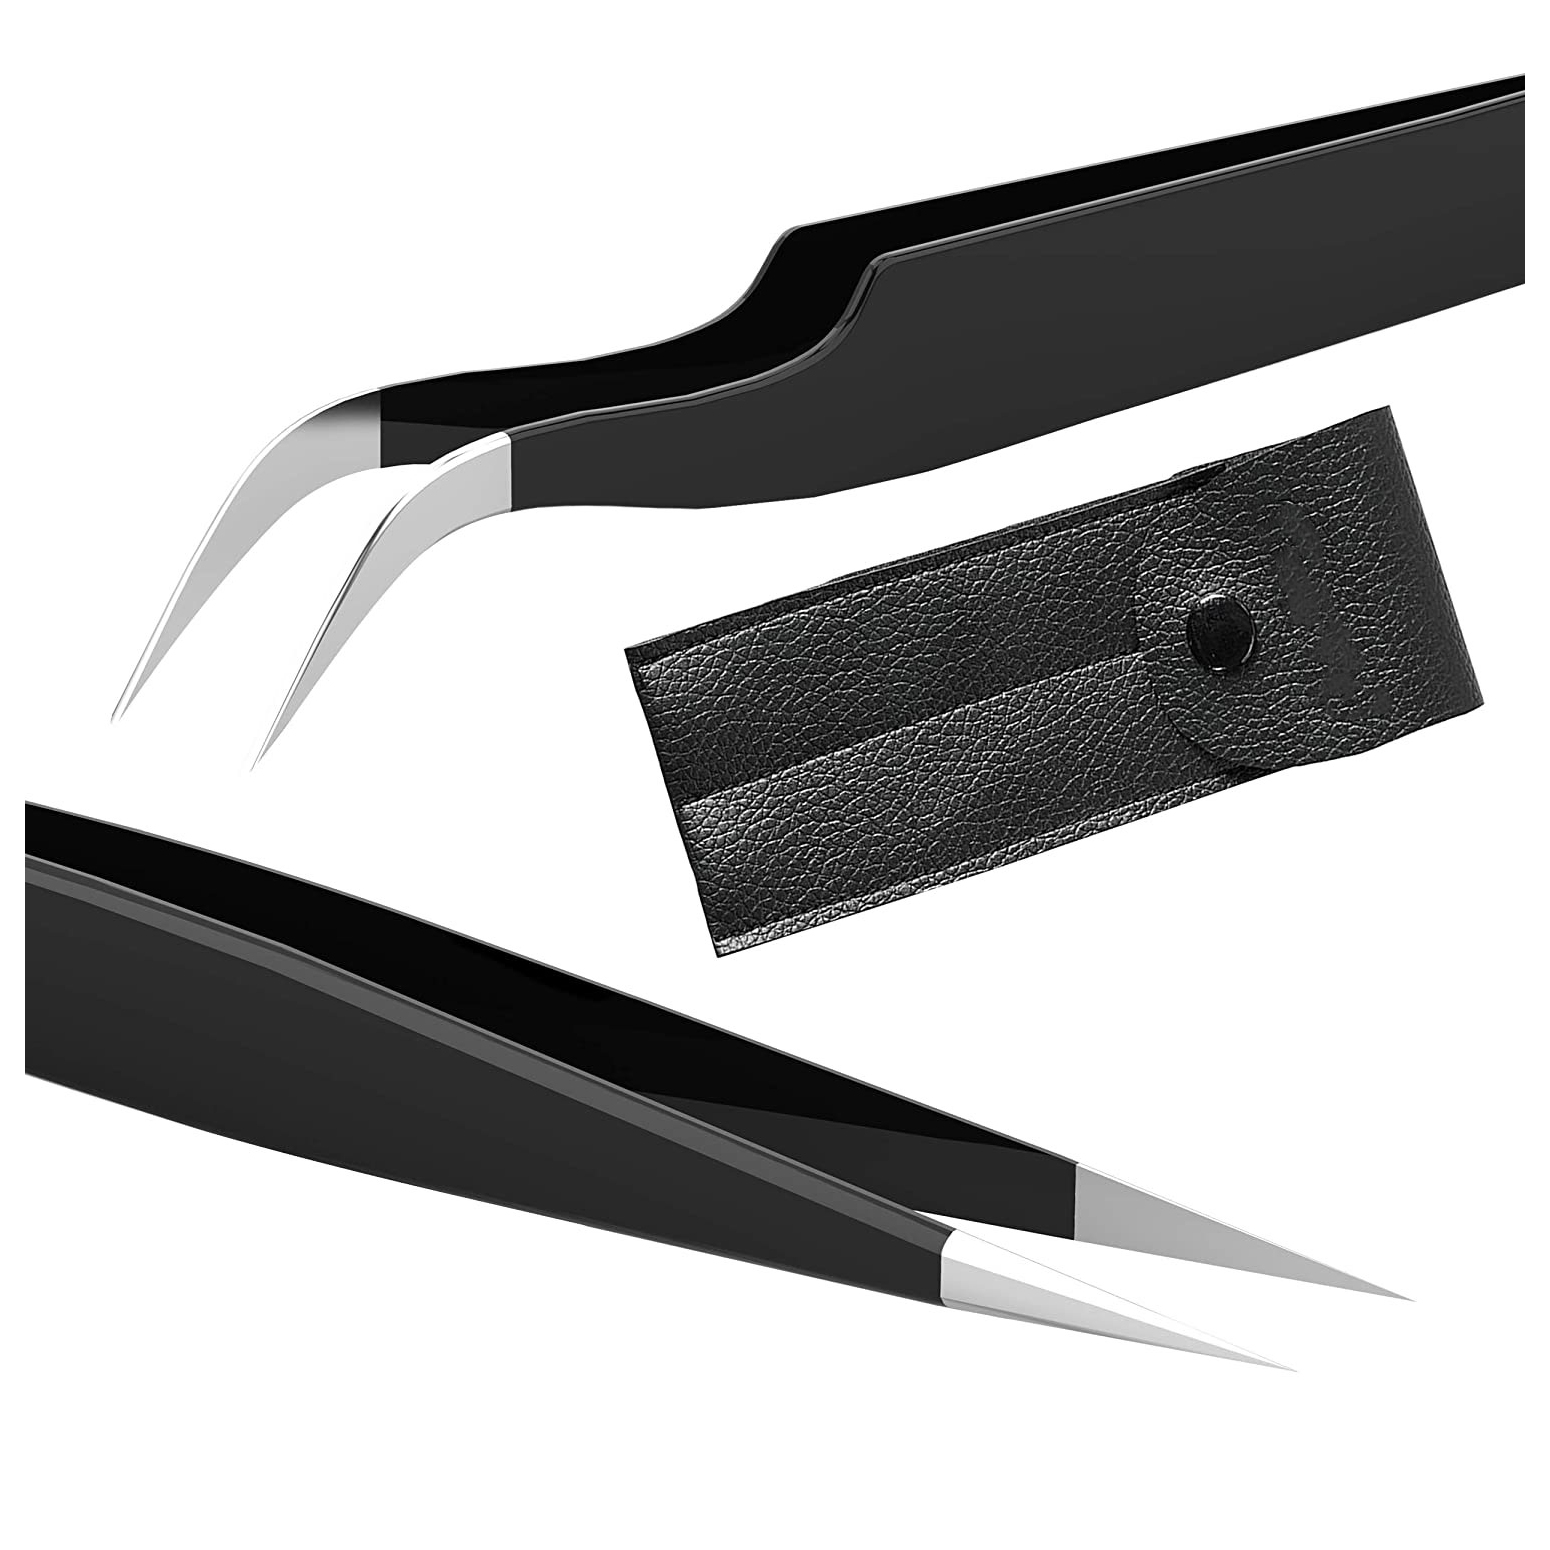 Lash Eyelash Extension Tweezers Set of 5, Japanese Stainless Steel Tools Straight Curved 45 90 Degree Angled Tip, Volume Tweezer